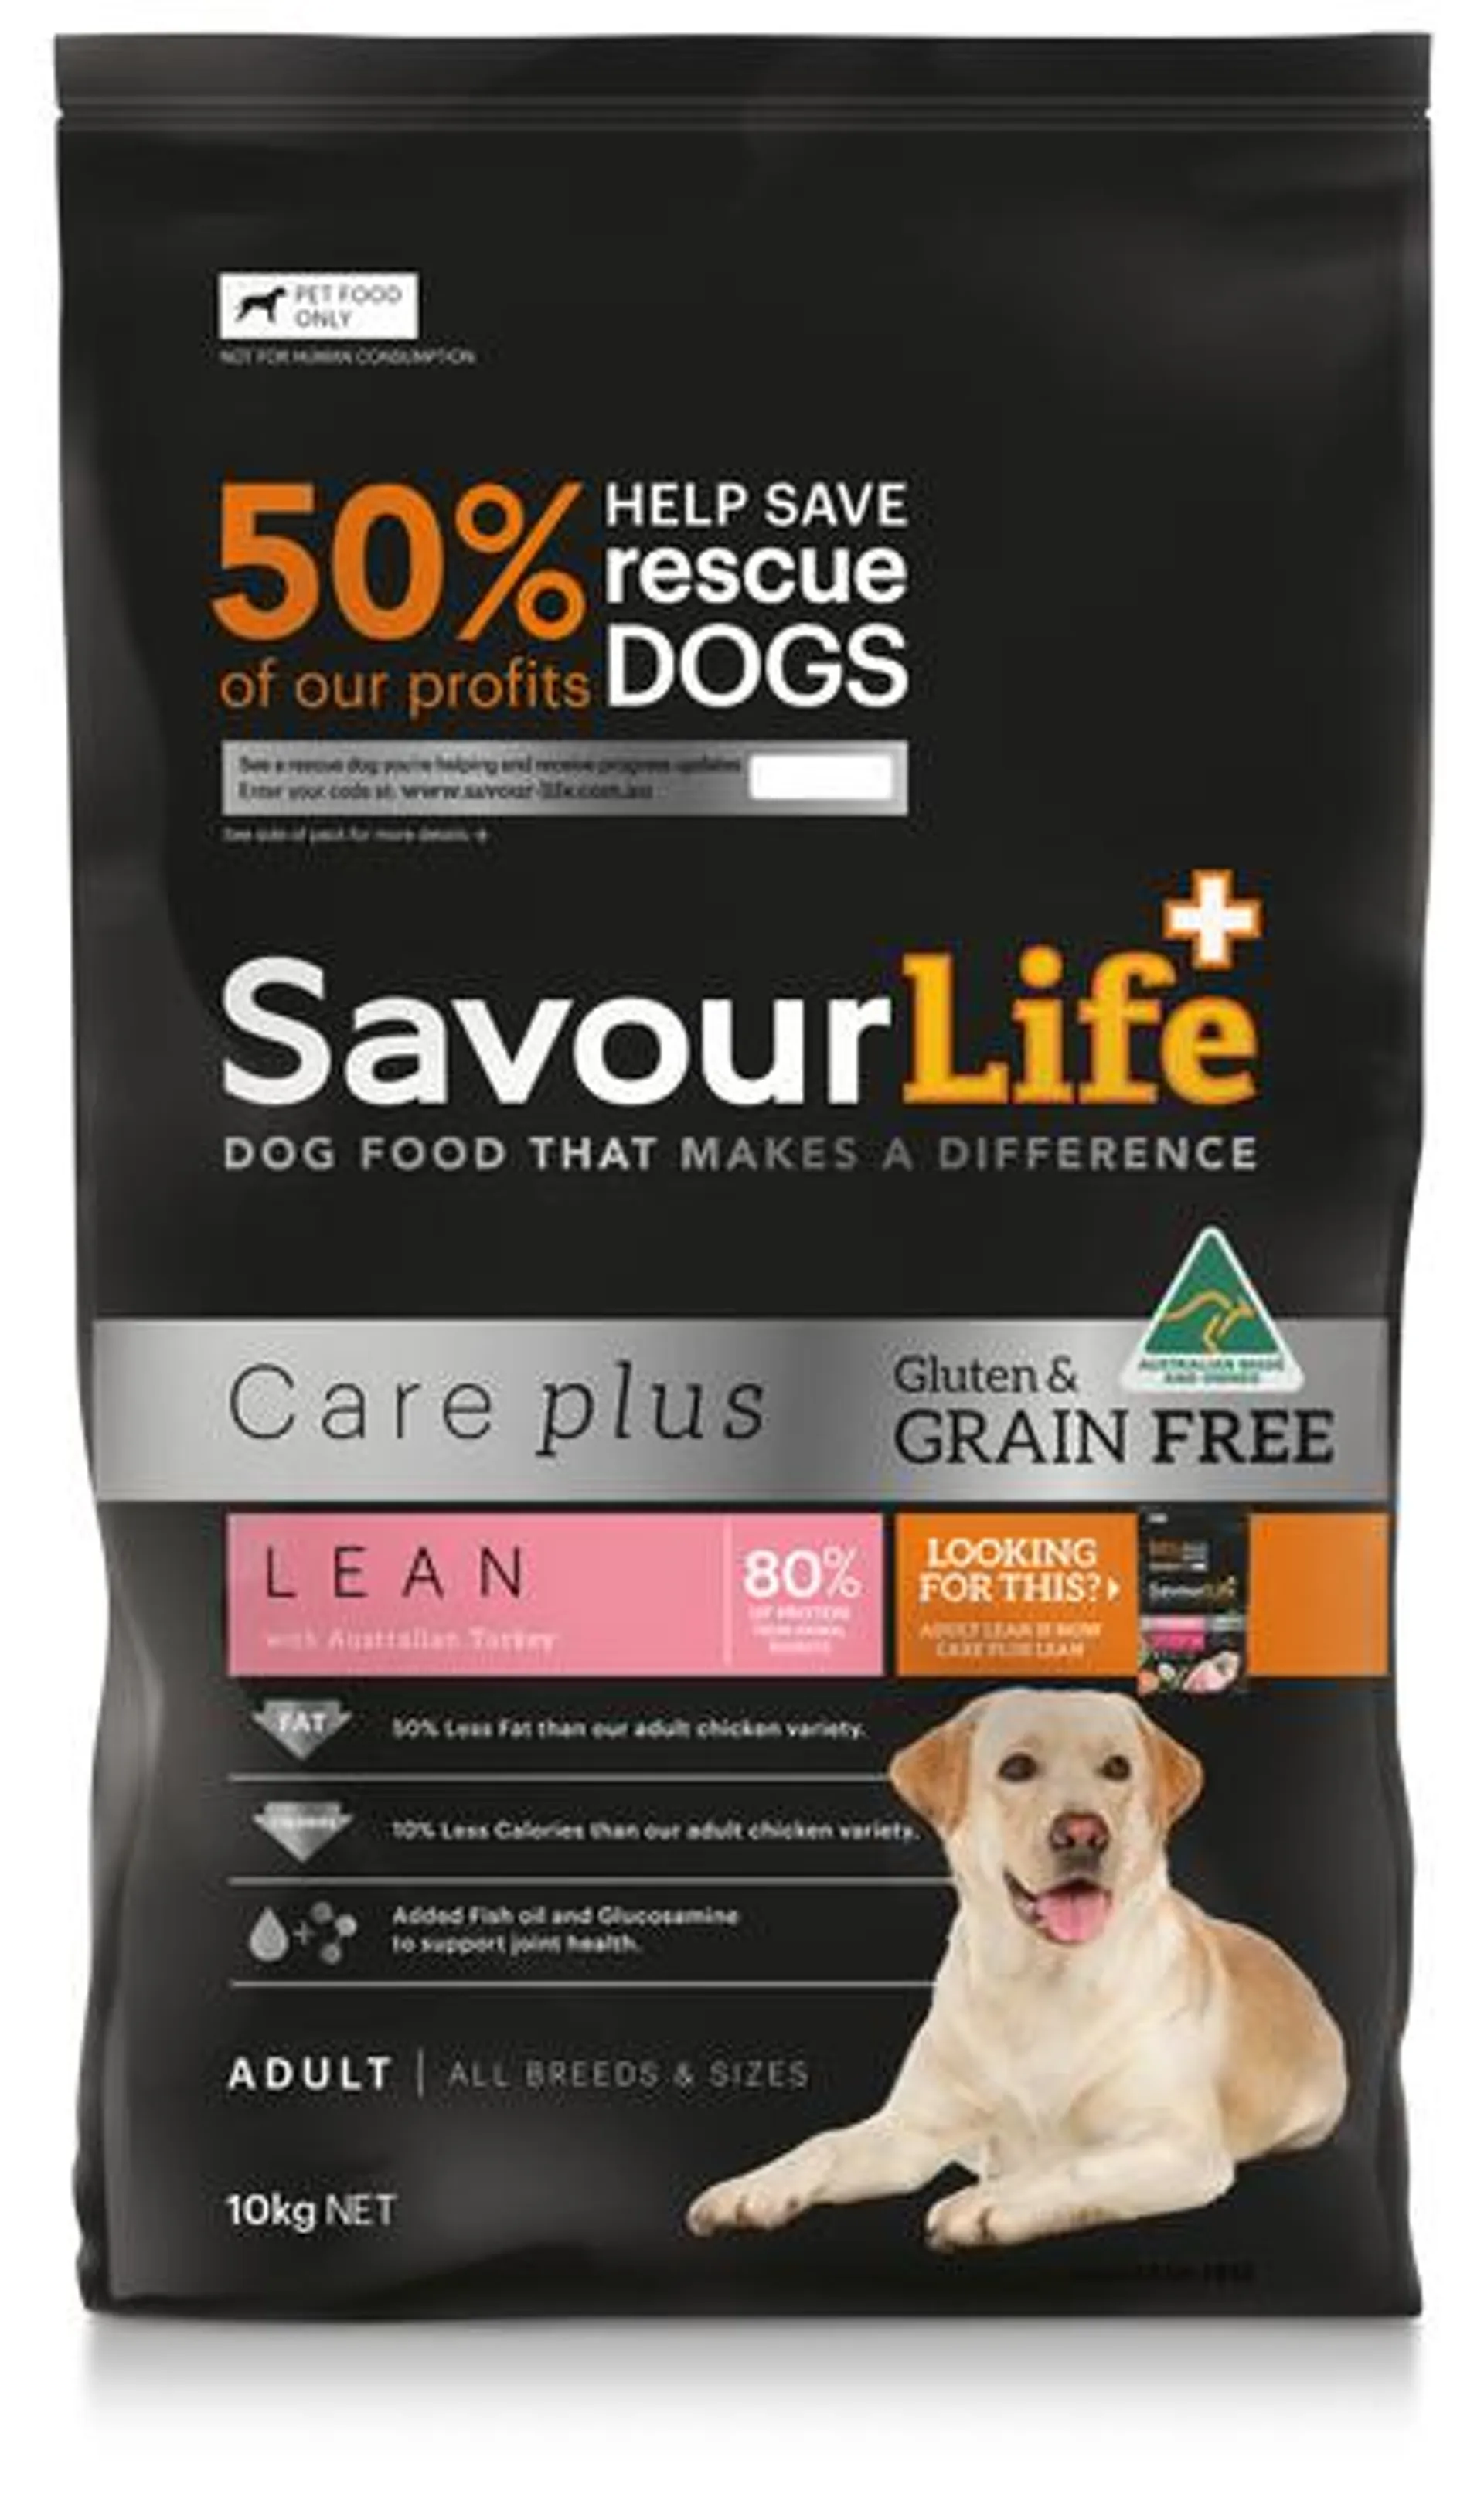 SavourLife - Grain Free Turkey CarePlus Lean Dog Dry Food (10kg)